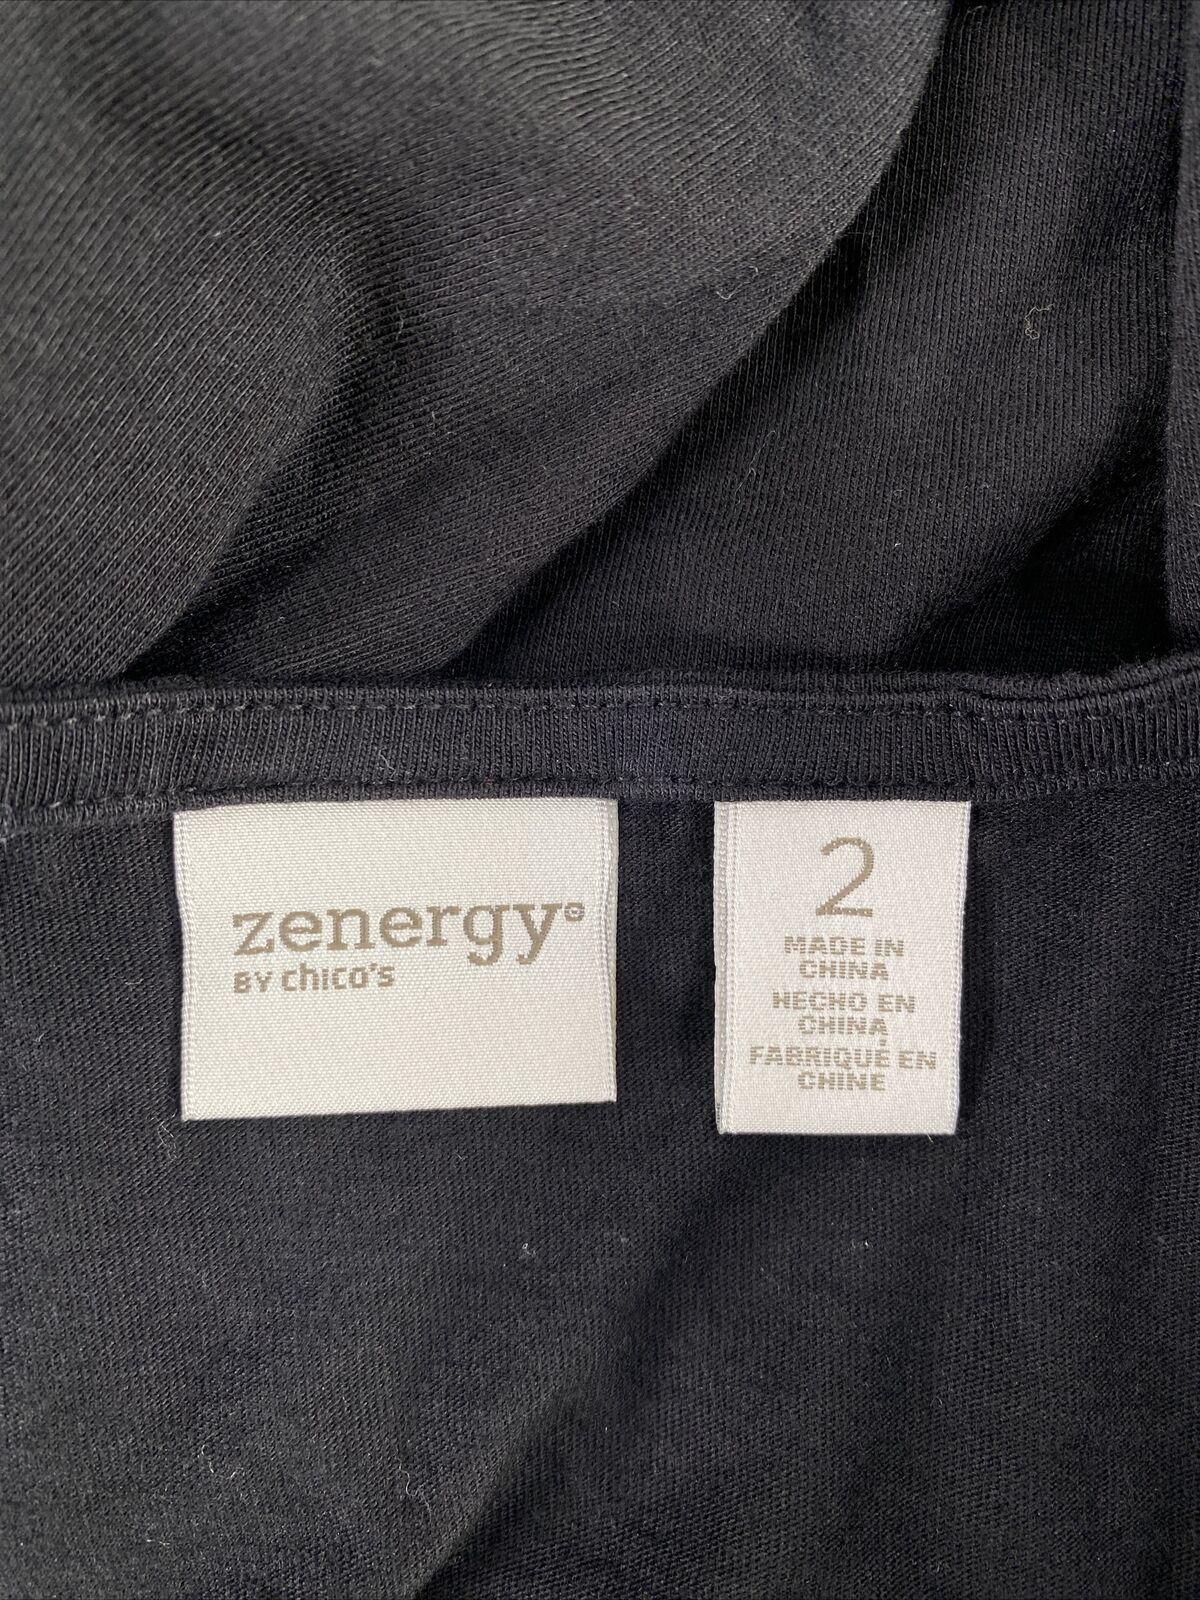 Zenergy by Chico's Camiseta de manga 3/4 con diamantes de imitación negros para mujer - 2/L